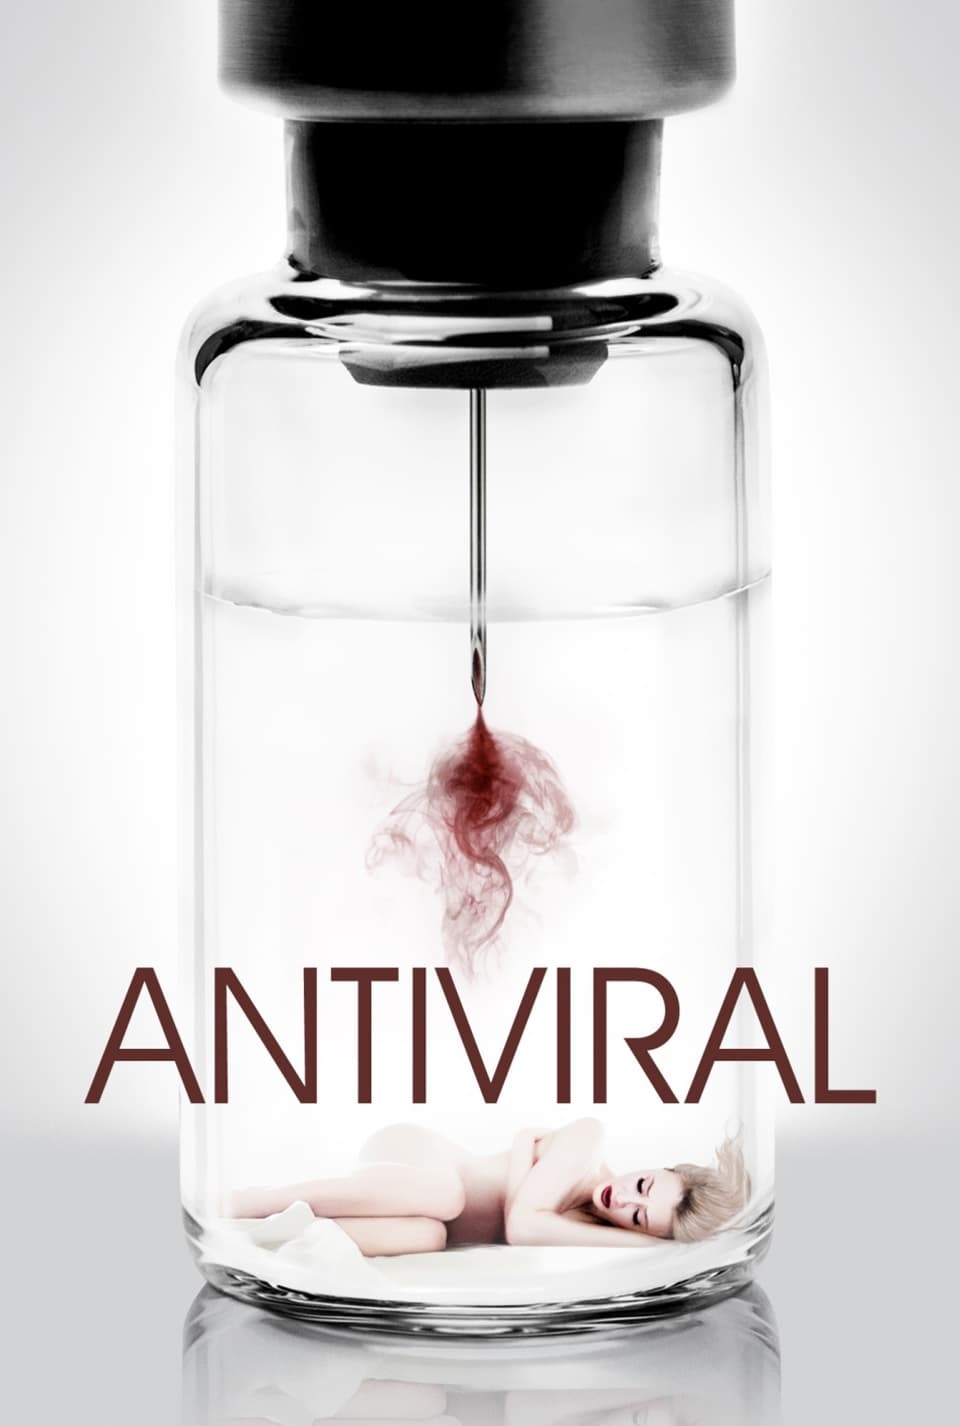 Antiviral [Sub-ITA] (2012)